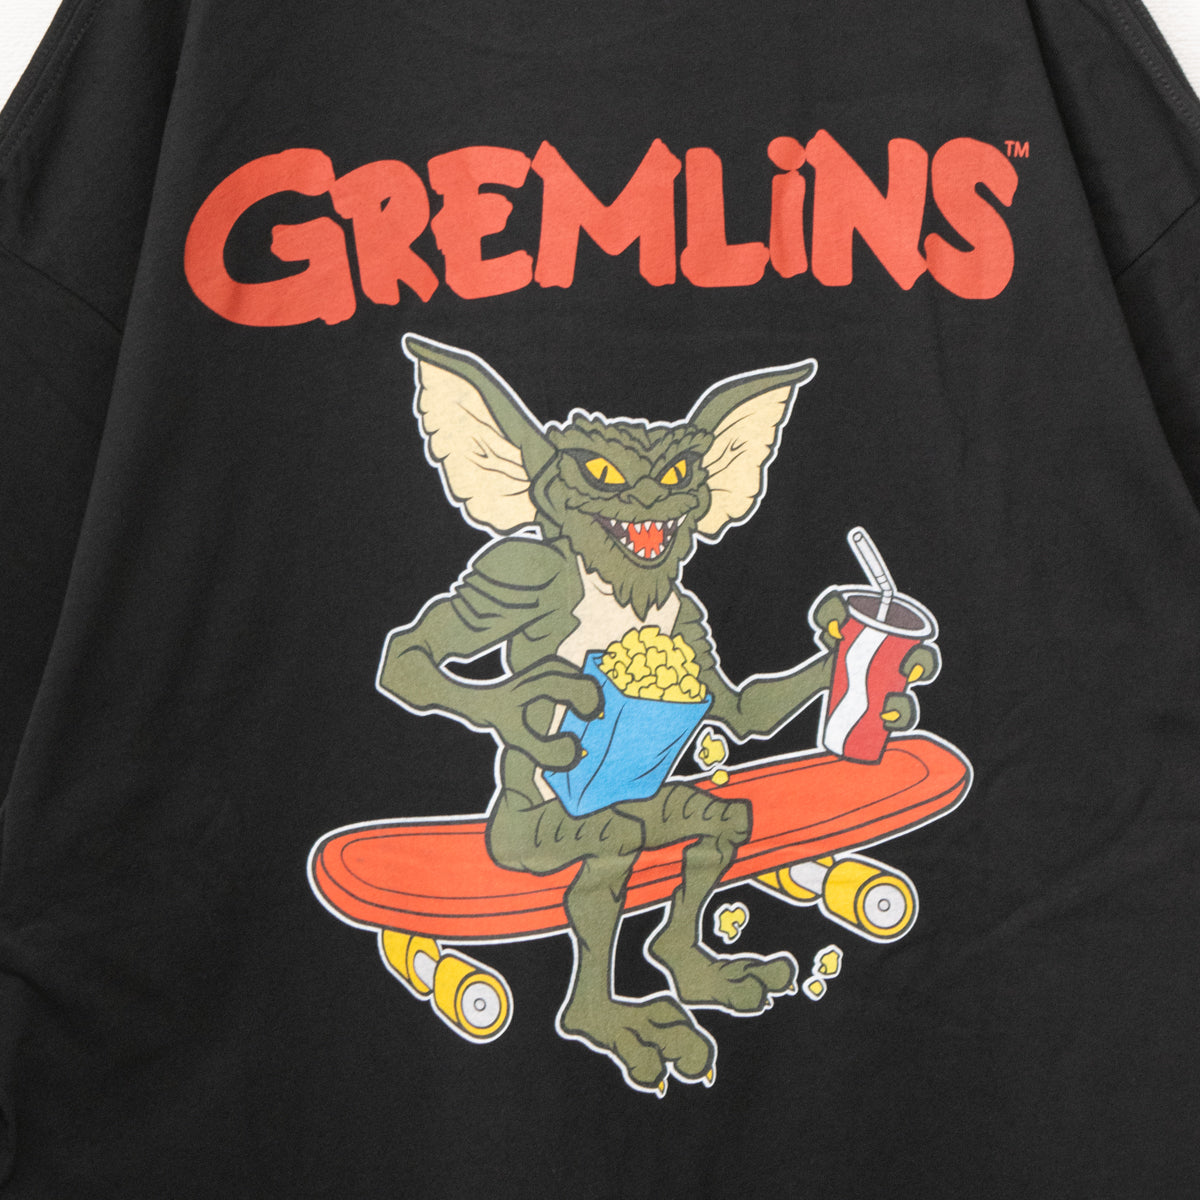 GREMLINS Print Over T-shirt Charcoal